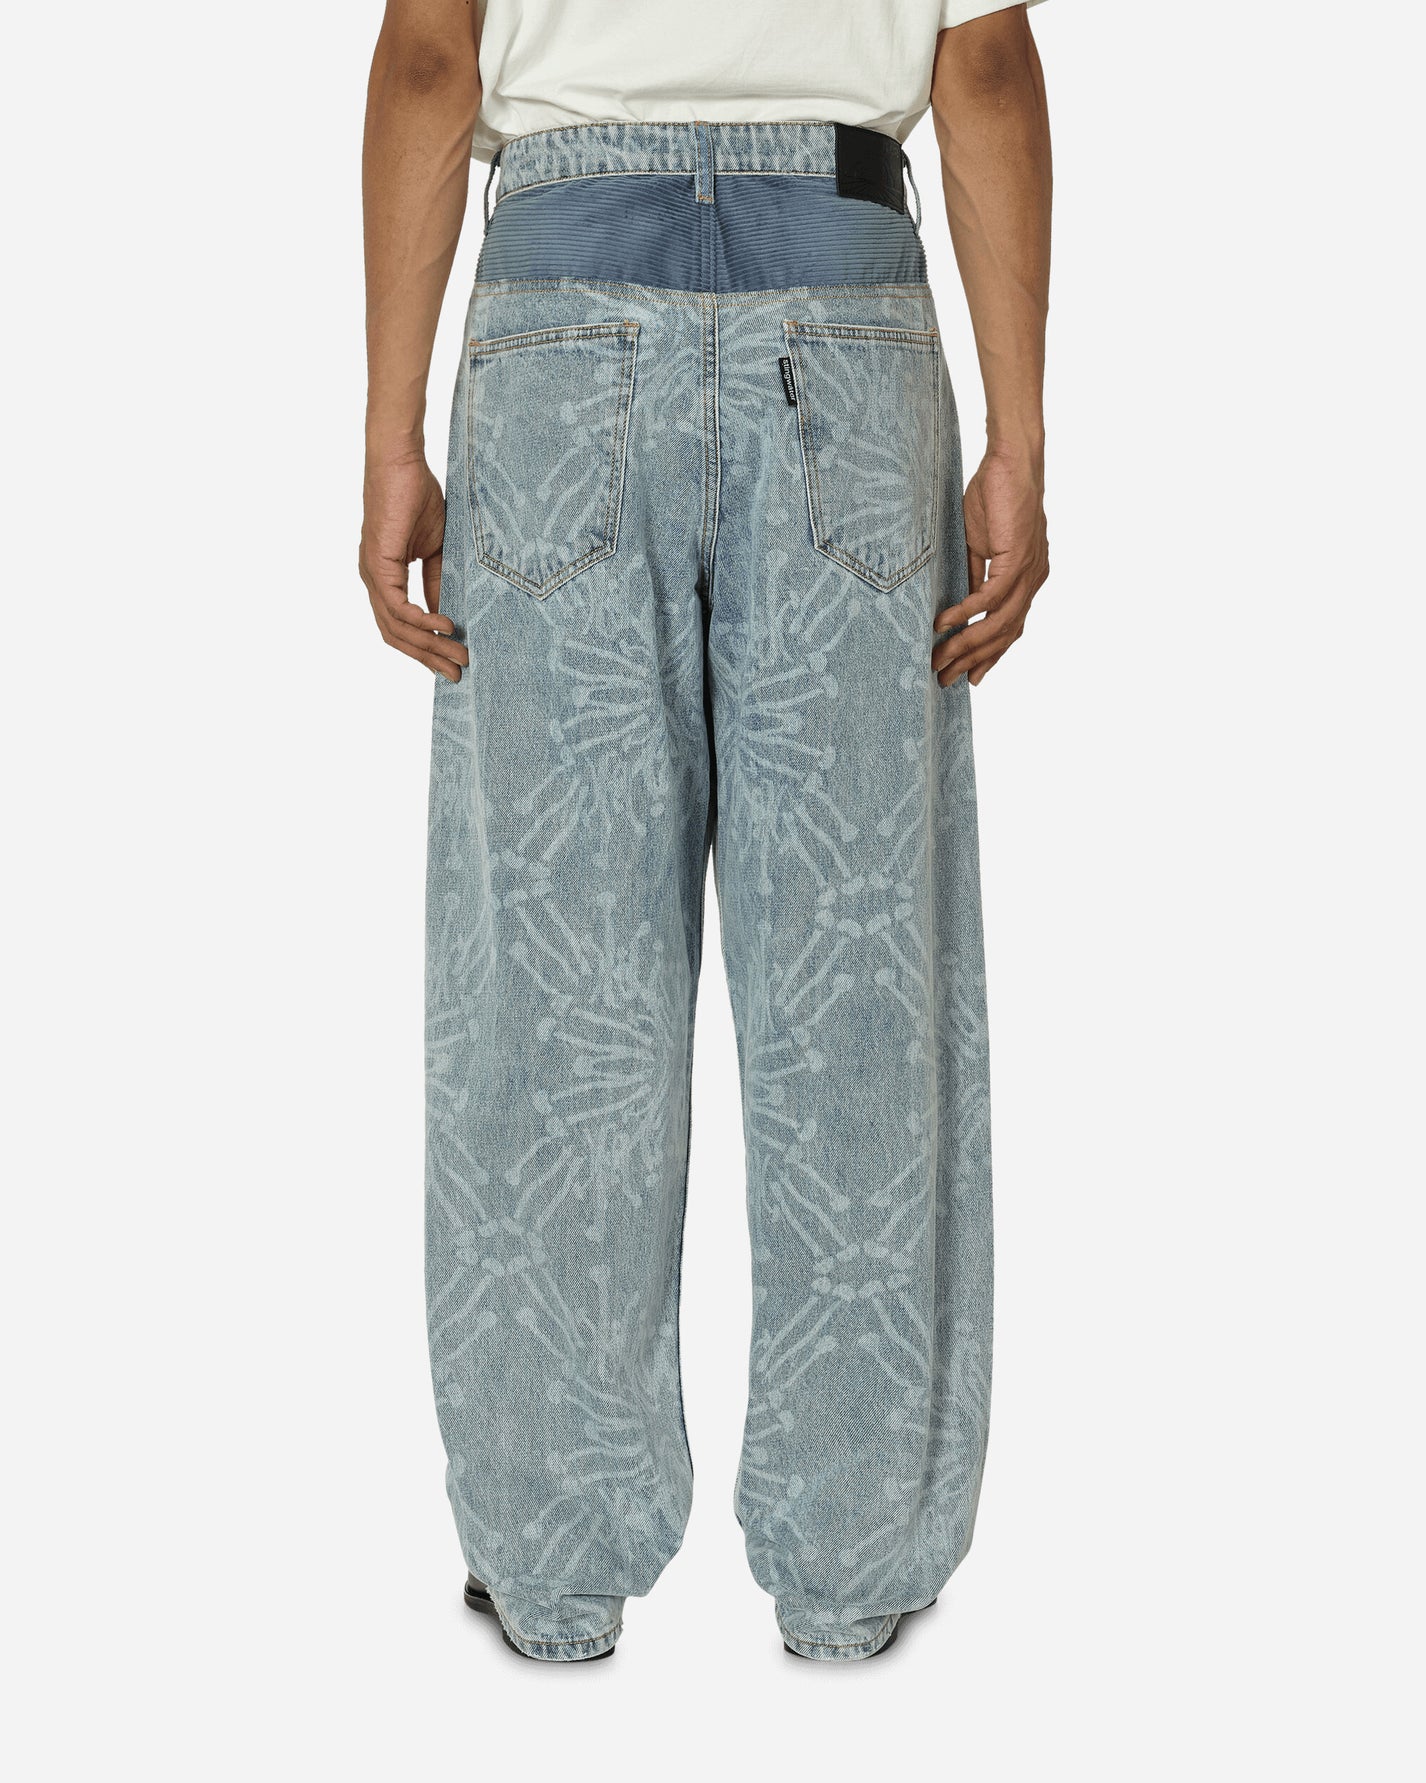 Stingwater Speshal Connection Jeans Blue  Pants Denim SPESHALJEAN BLU